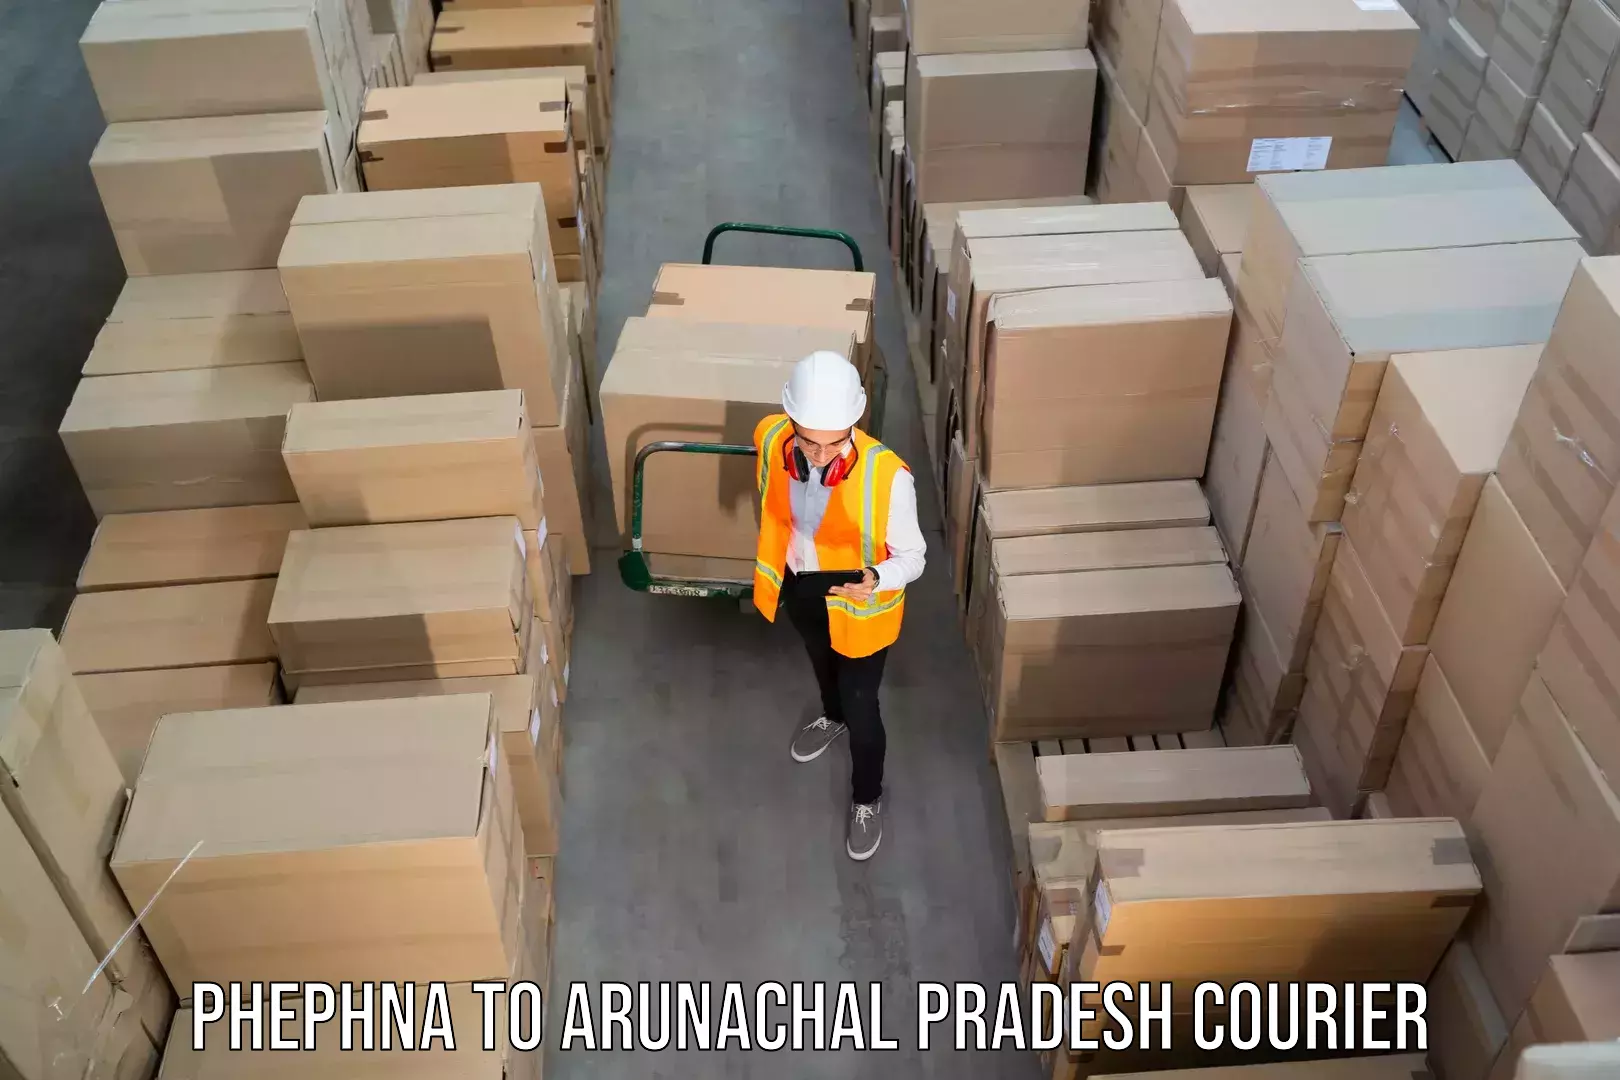 Reliable delivery network Phephna to Arunachal Pradesh